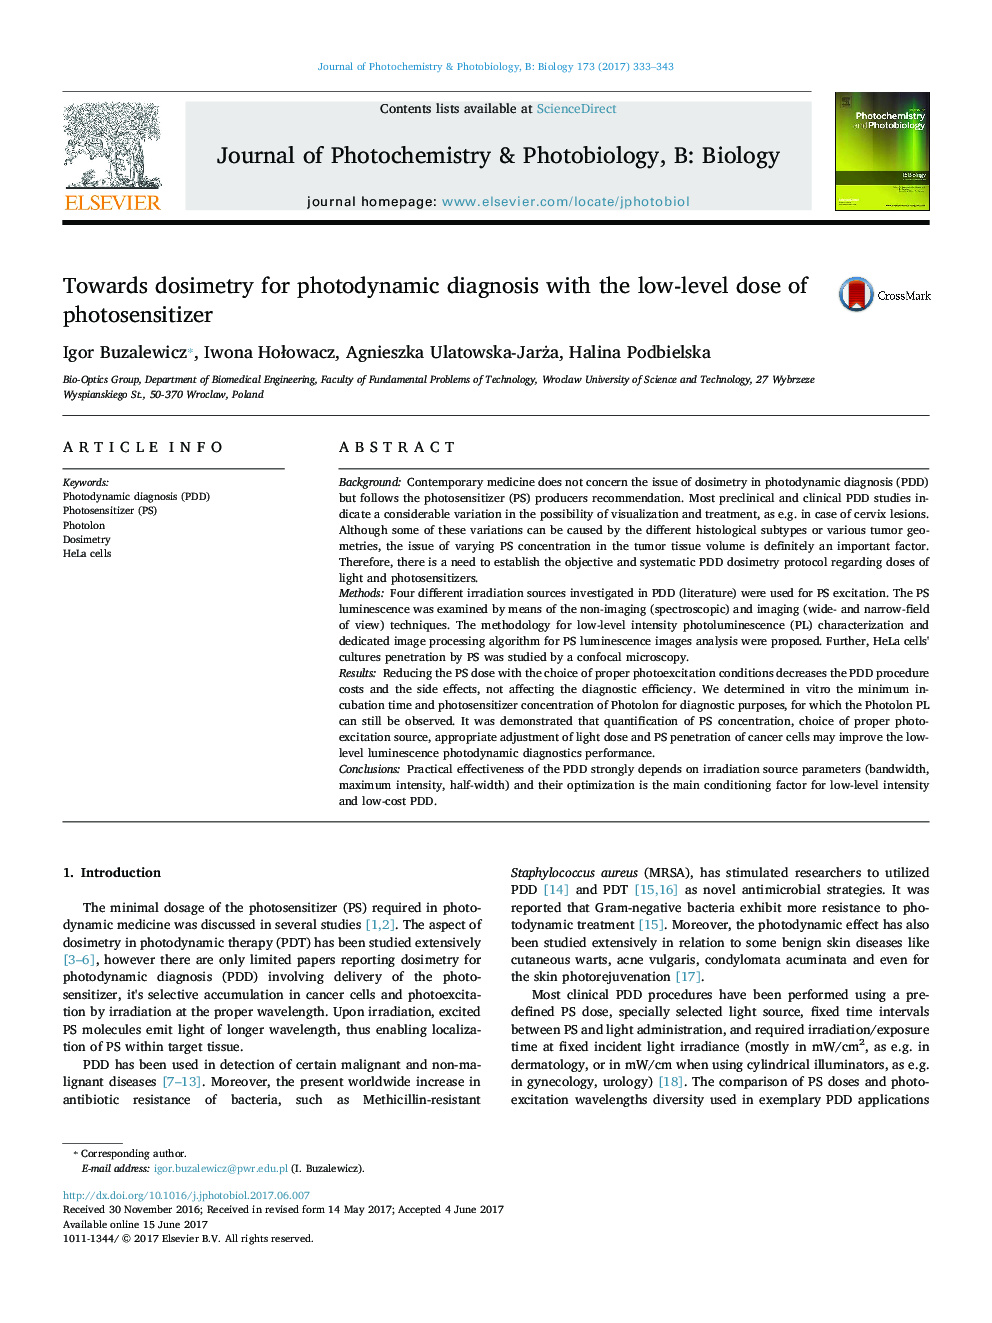 Towards dosimetry for photodynamic diagnosis with the low-level dose of photosensitizer